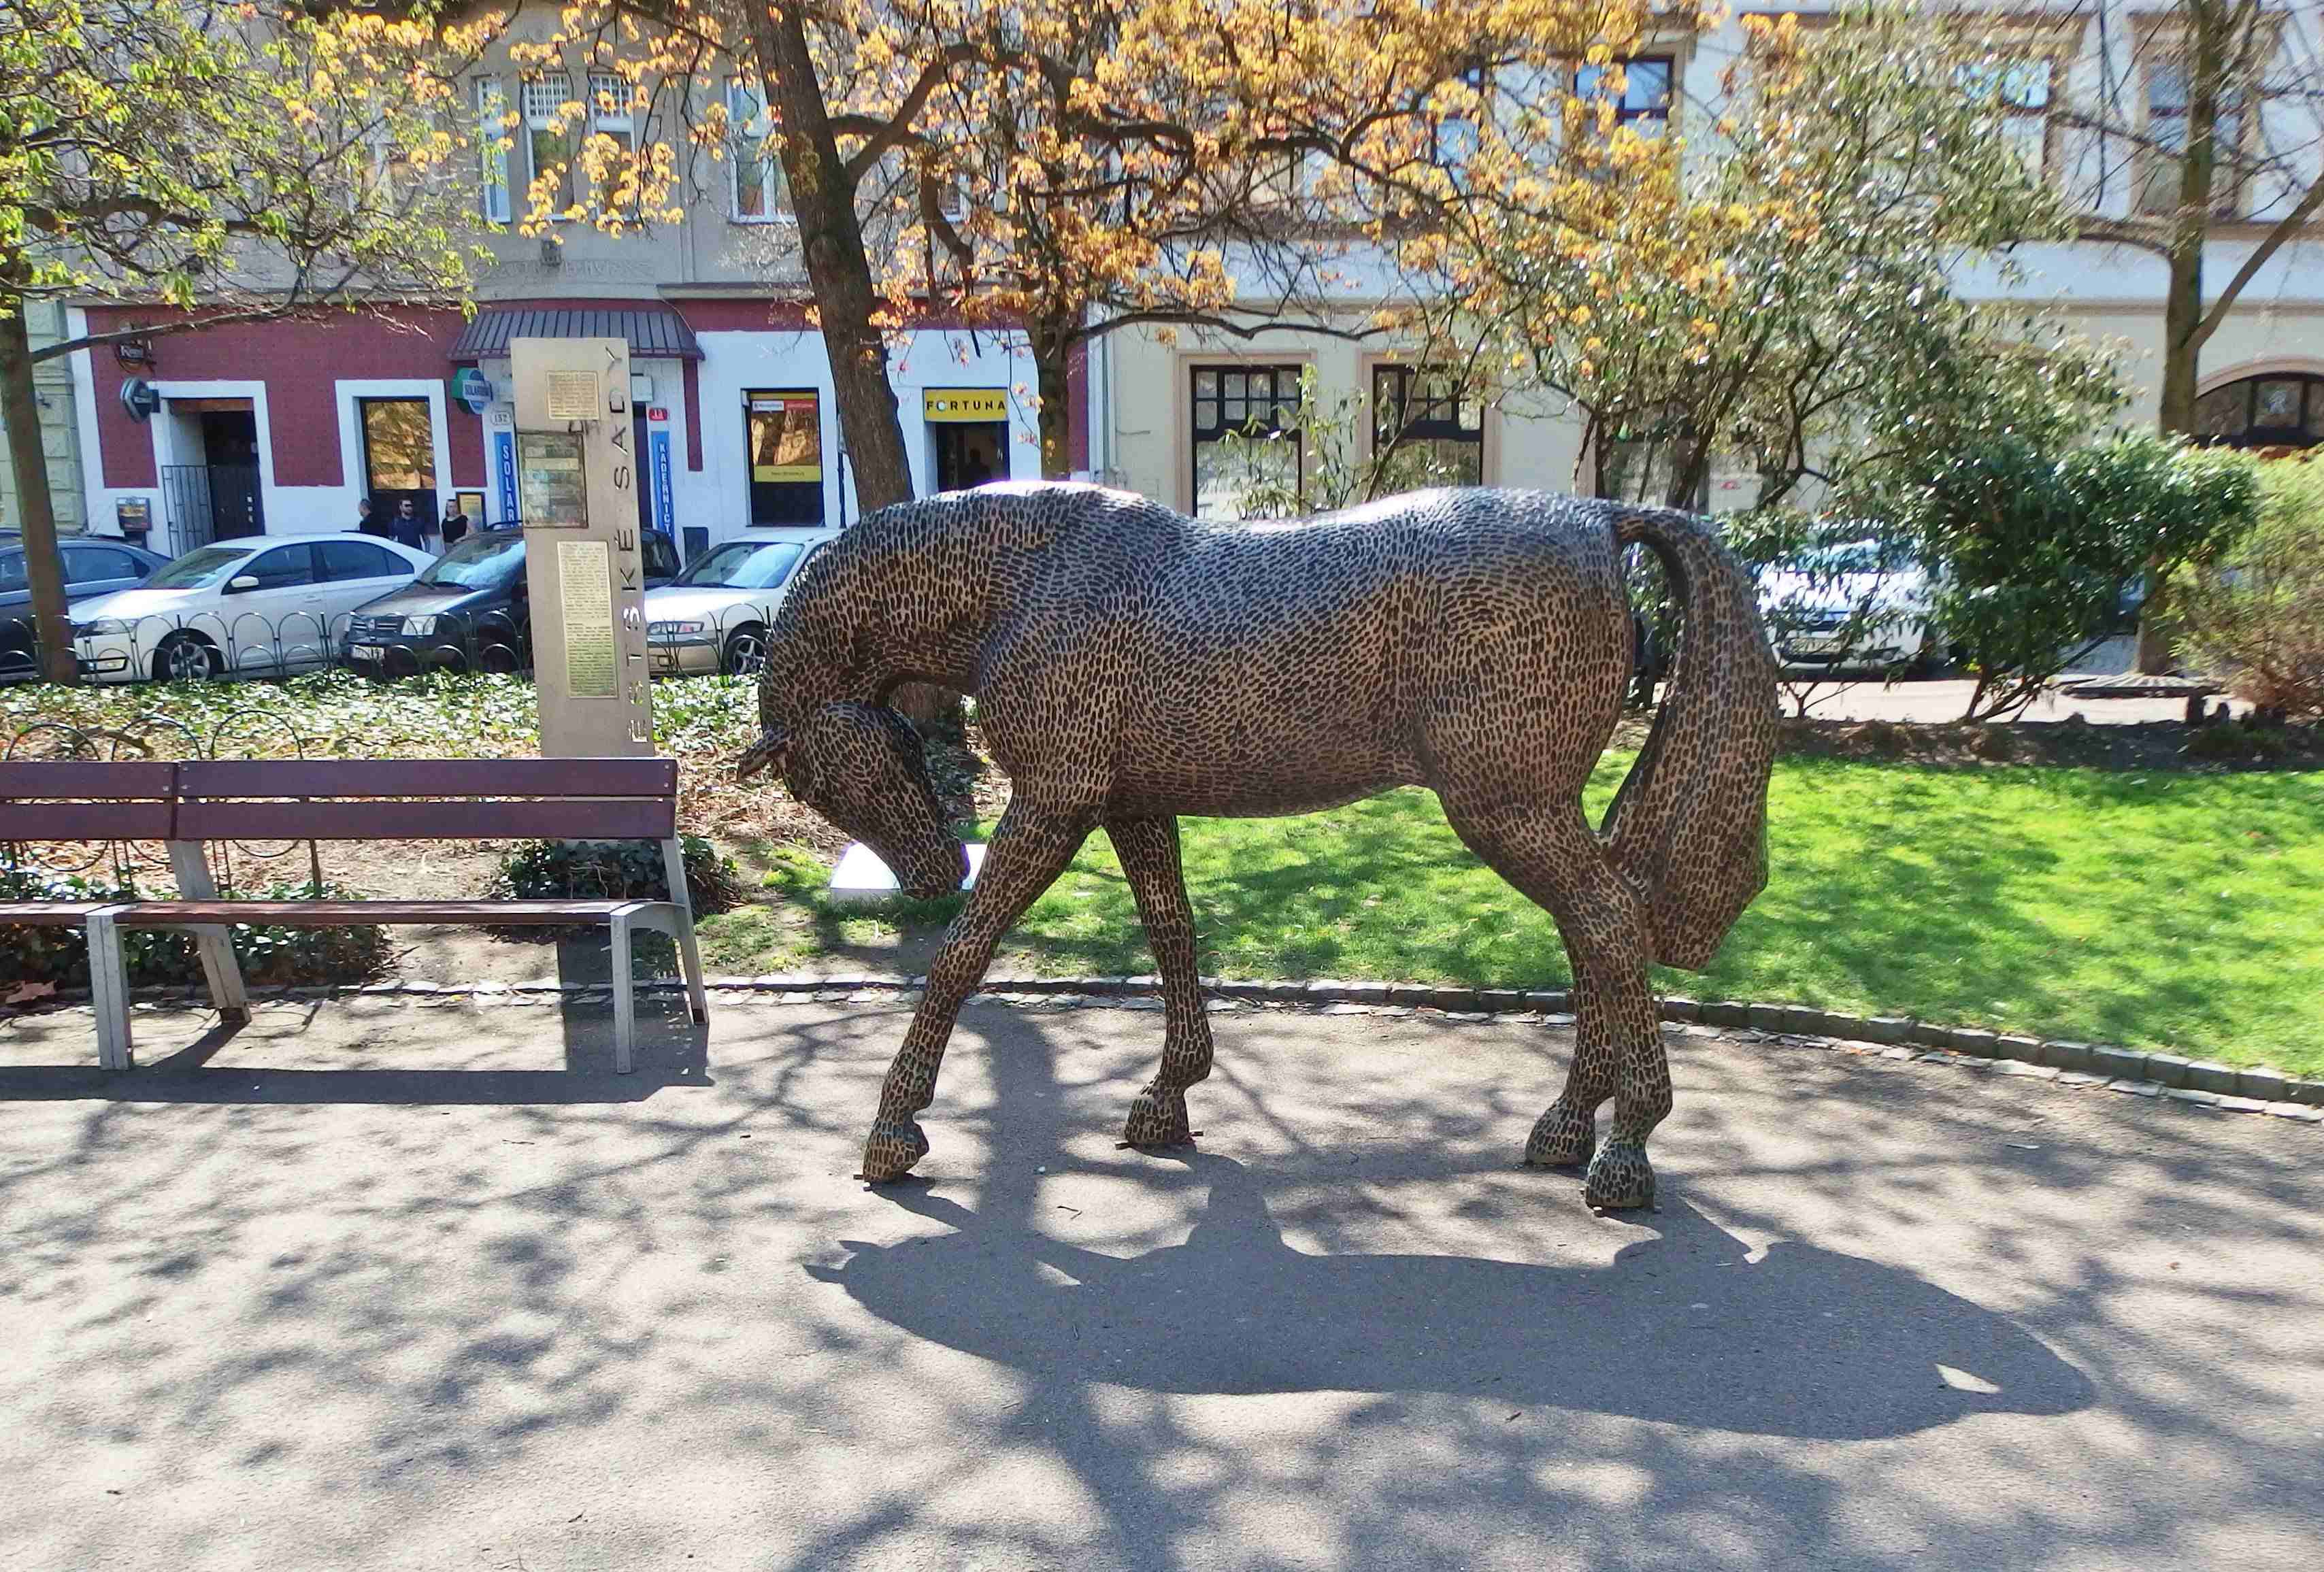 Michael Gabriel: Horse, source: Wikimedia